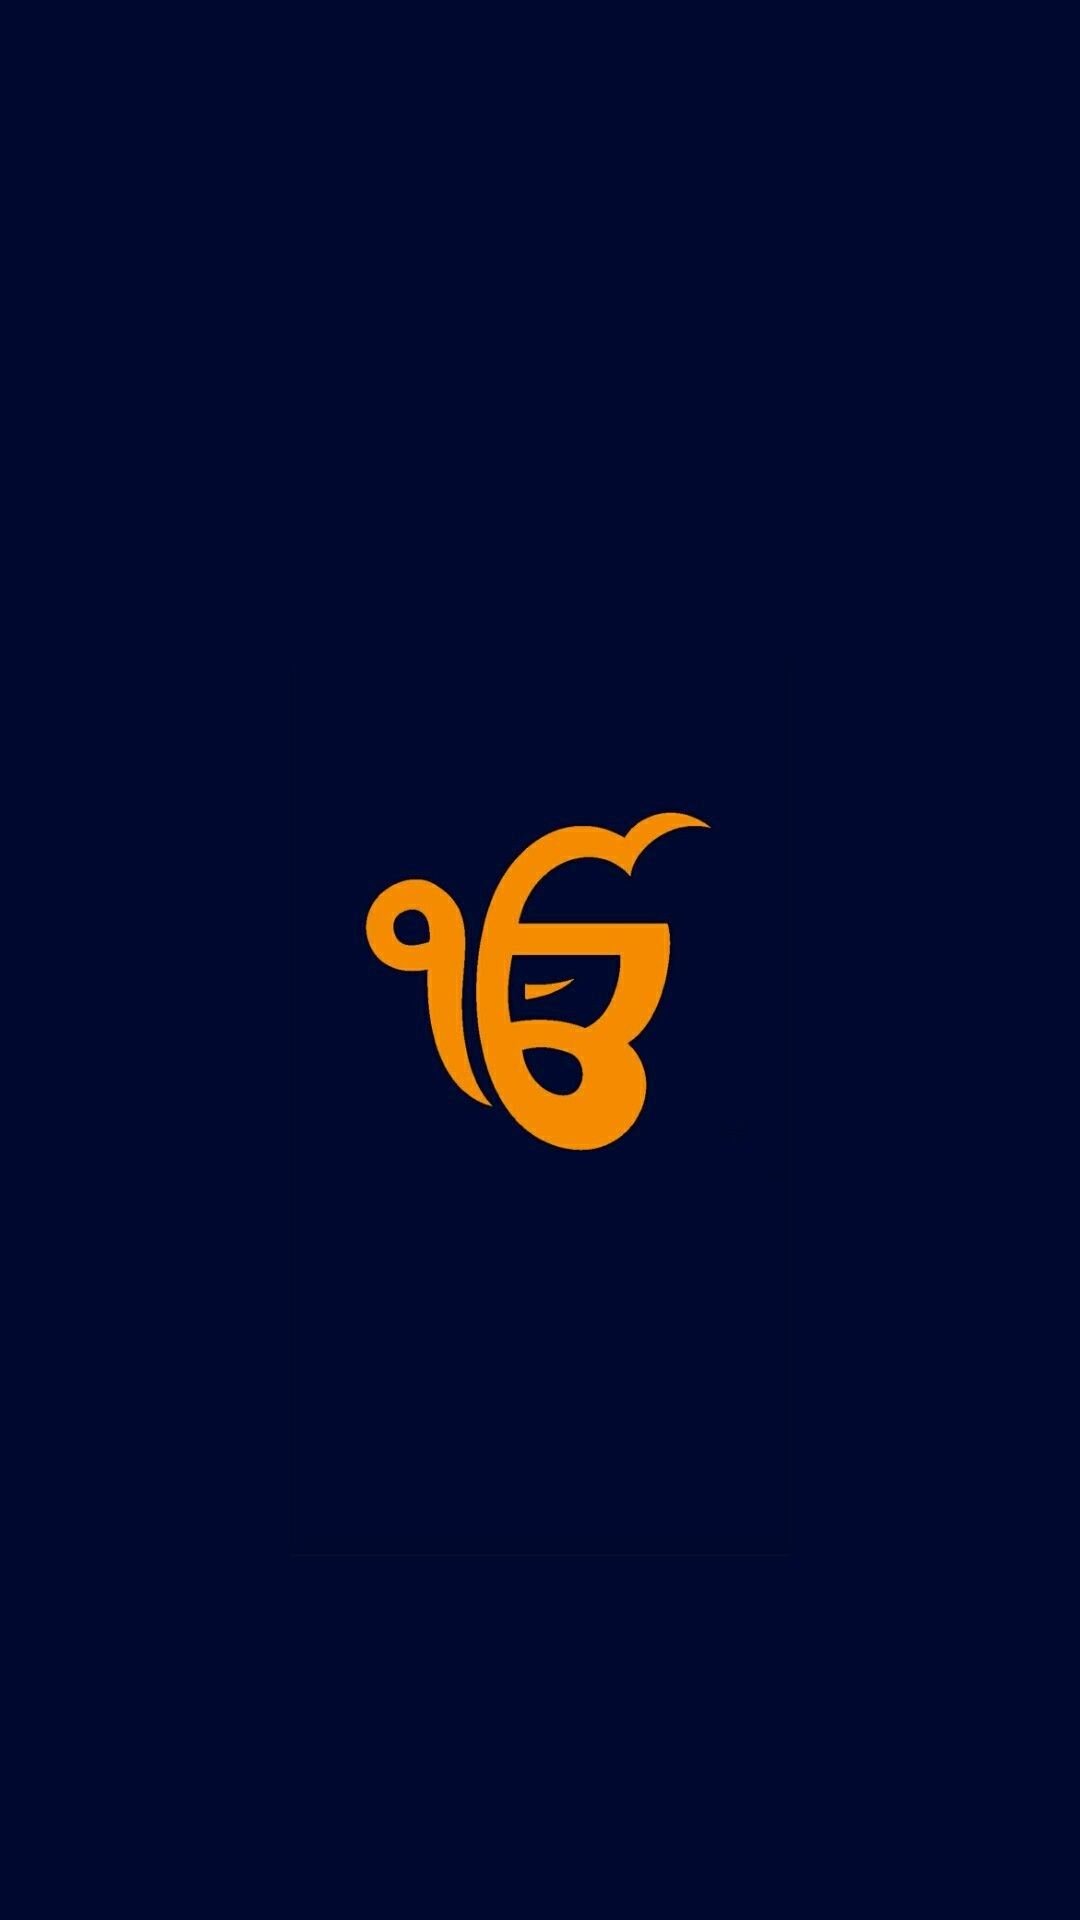 sikh symbol wallpaper